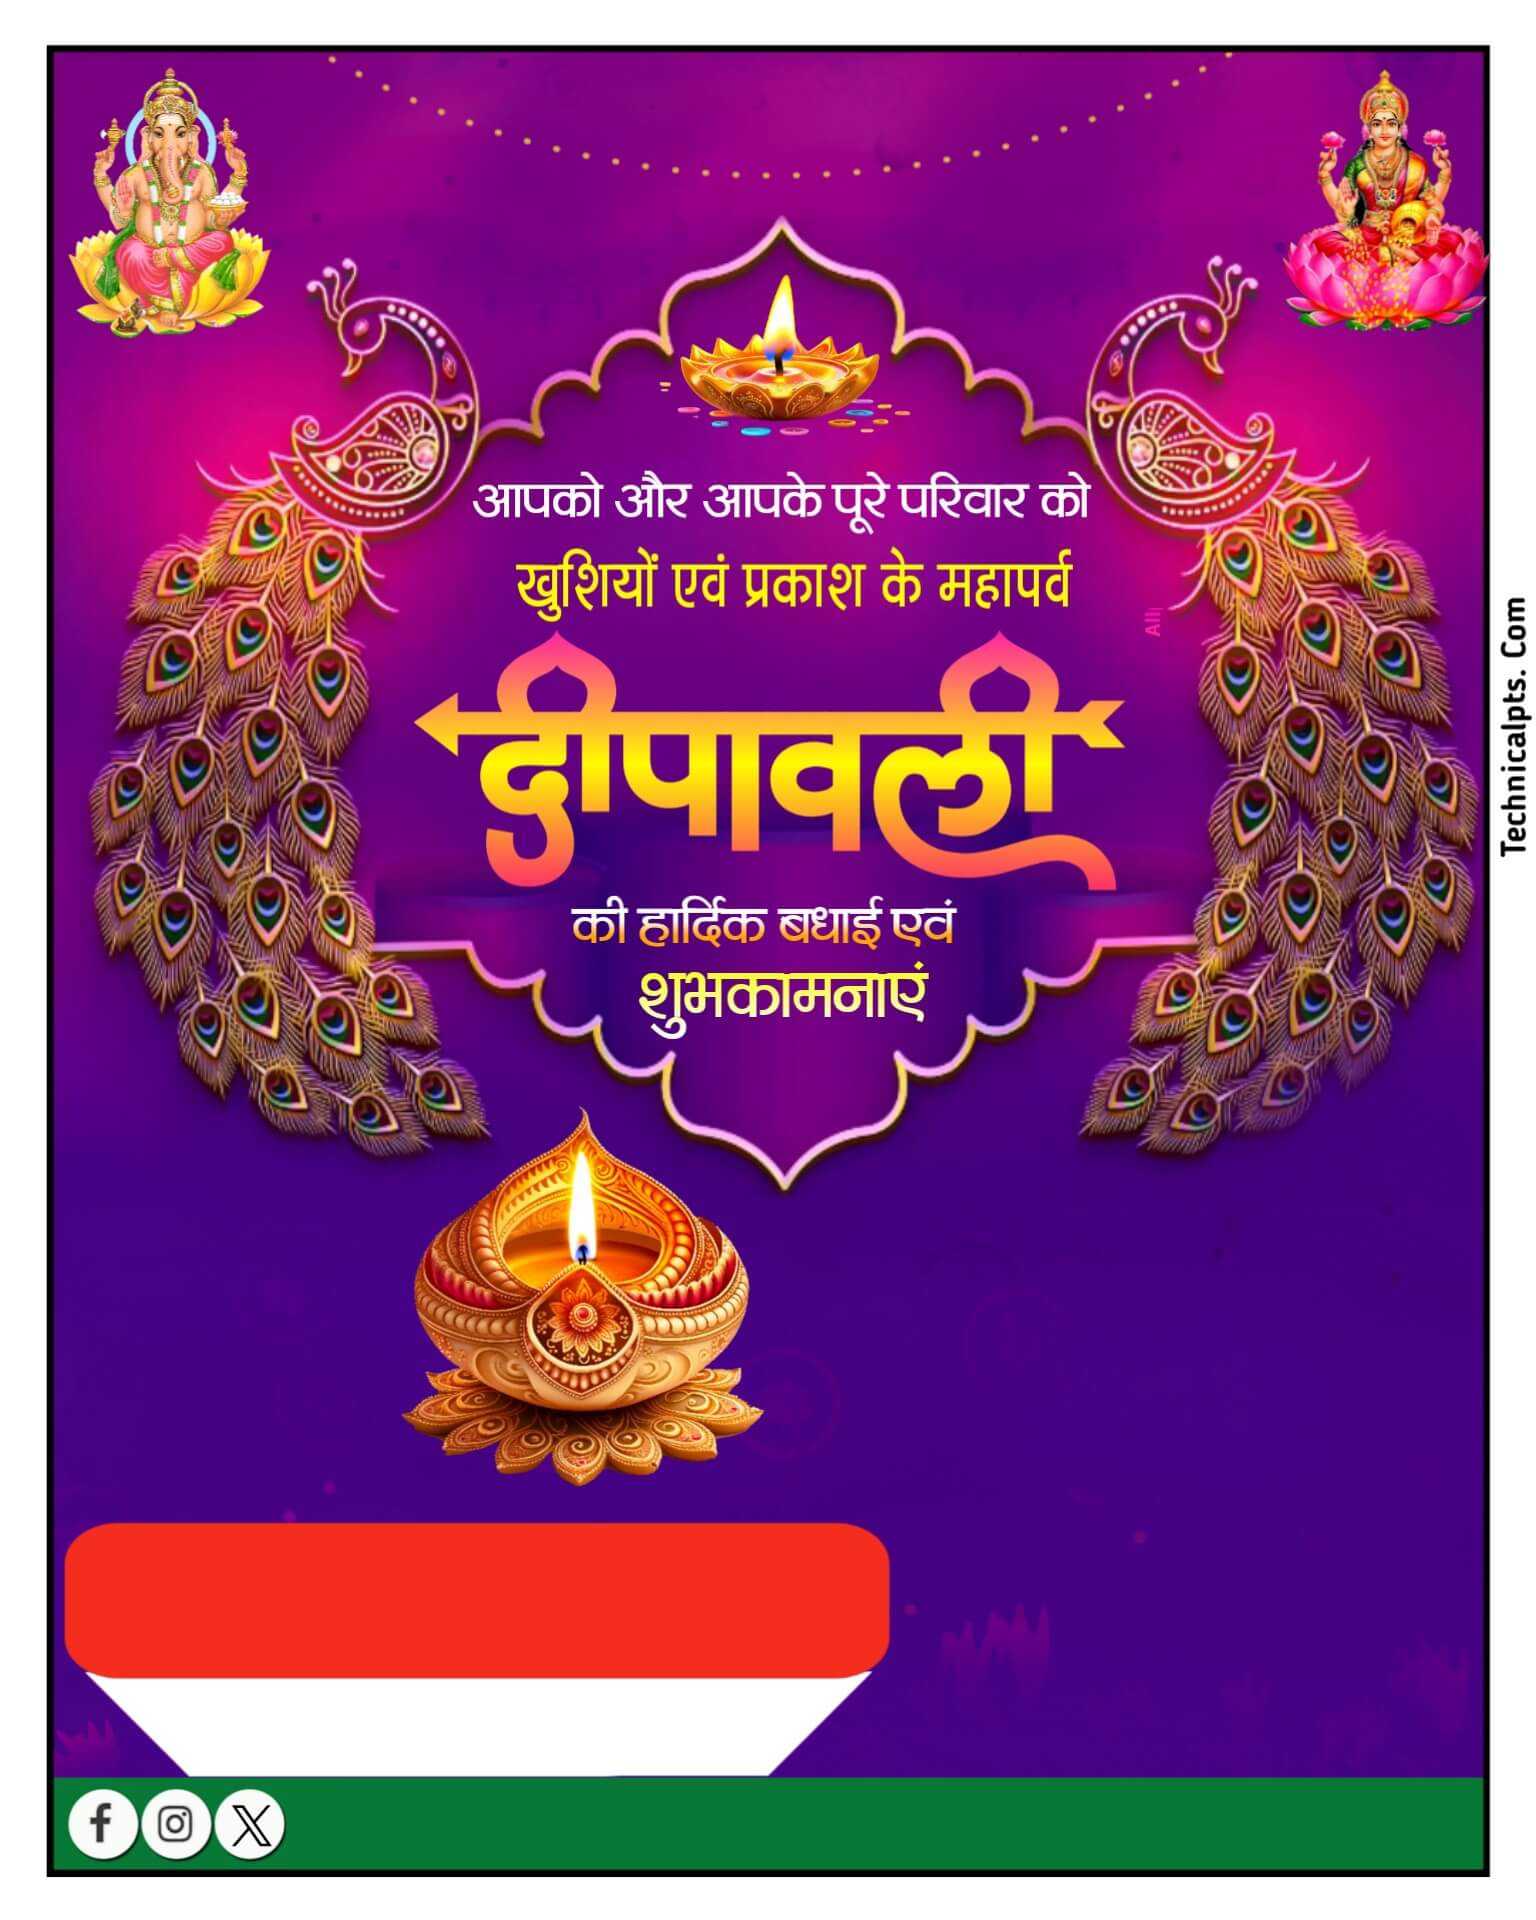 Diwali poster banaen mobile se| Diwali poster ka Plp file download| Diwali ka banner plp file download